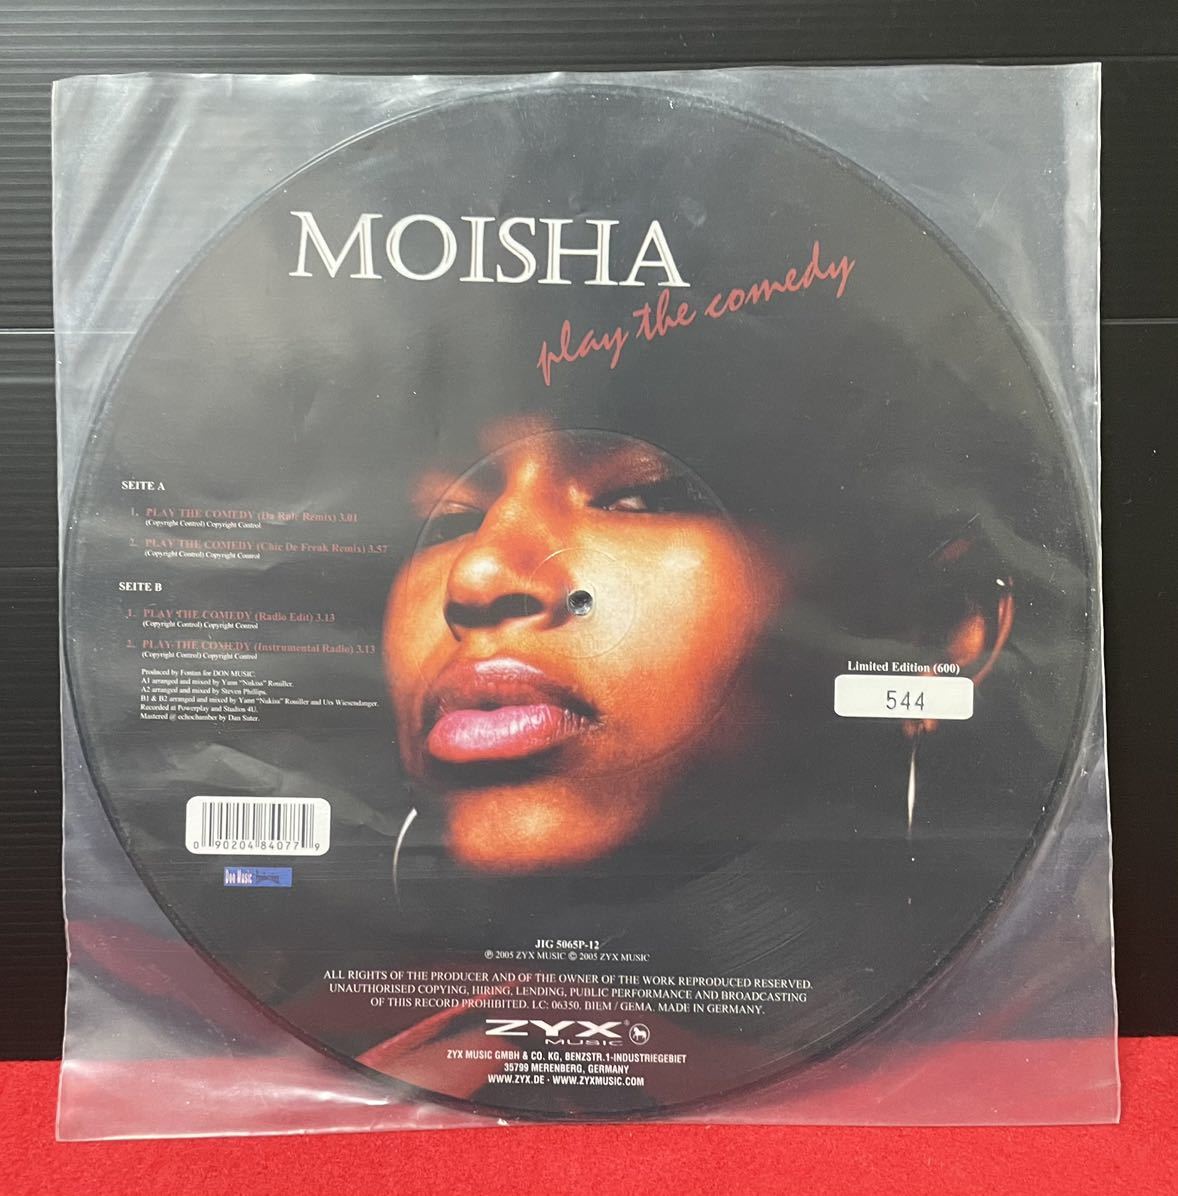 Moisha / Play The Comedy［Picture Disc edition］ 12inch盤その他にもプロモーション盤 レア盤 人気レコード 多数出品。_画像5